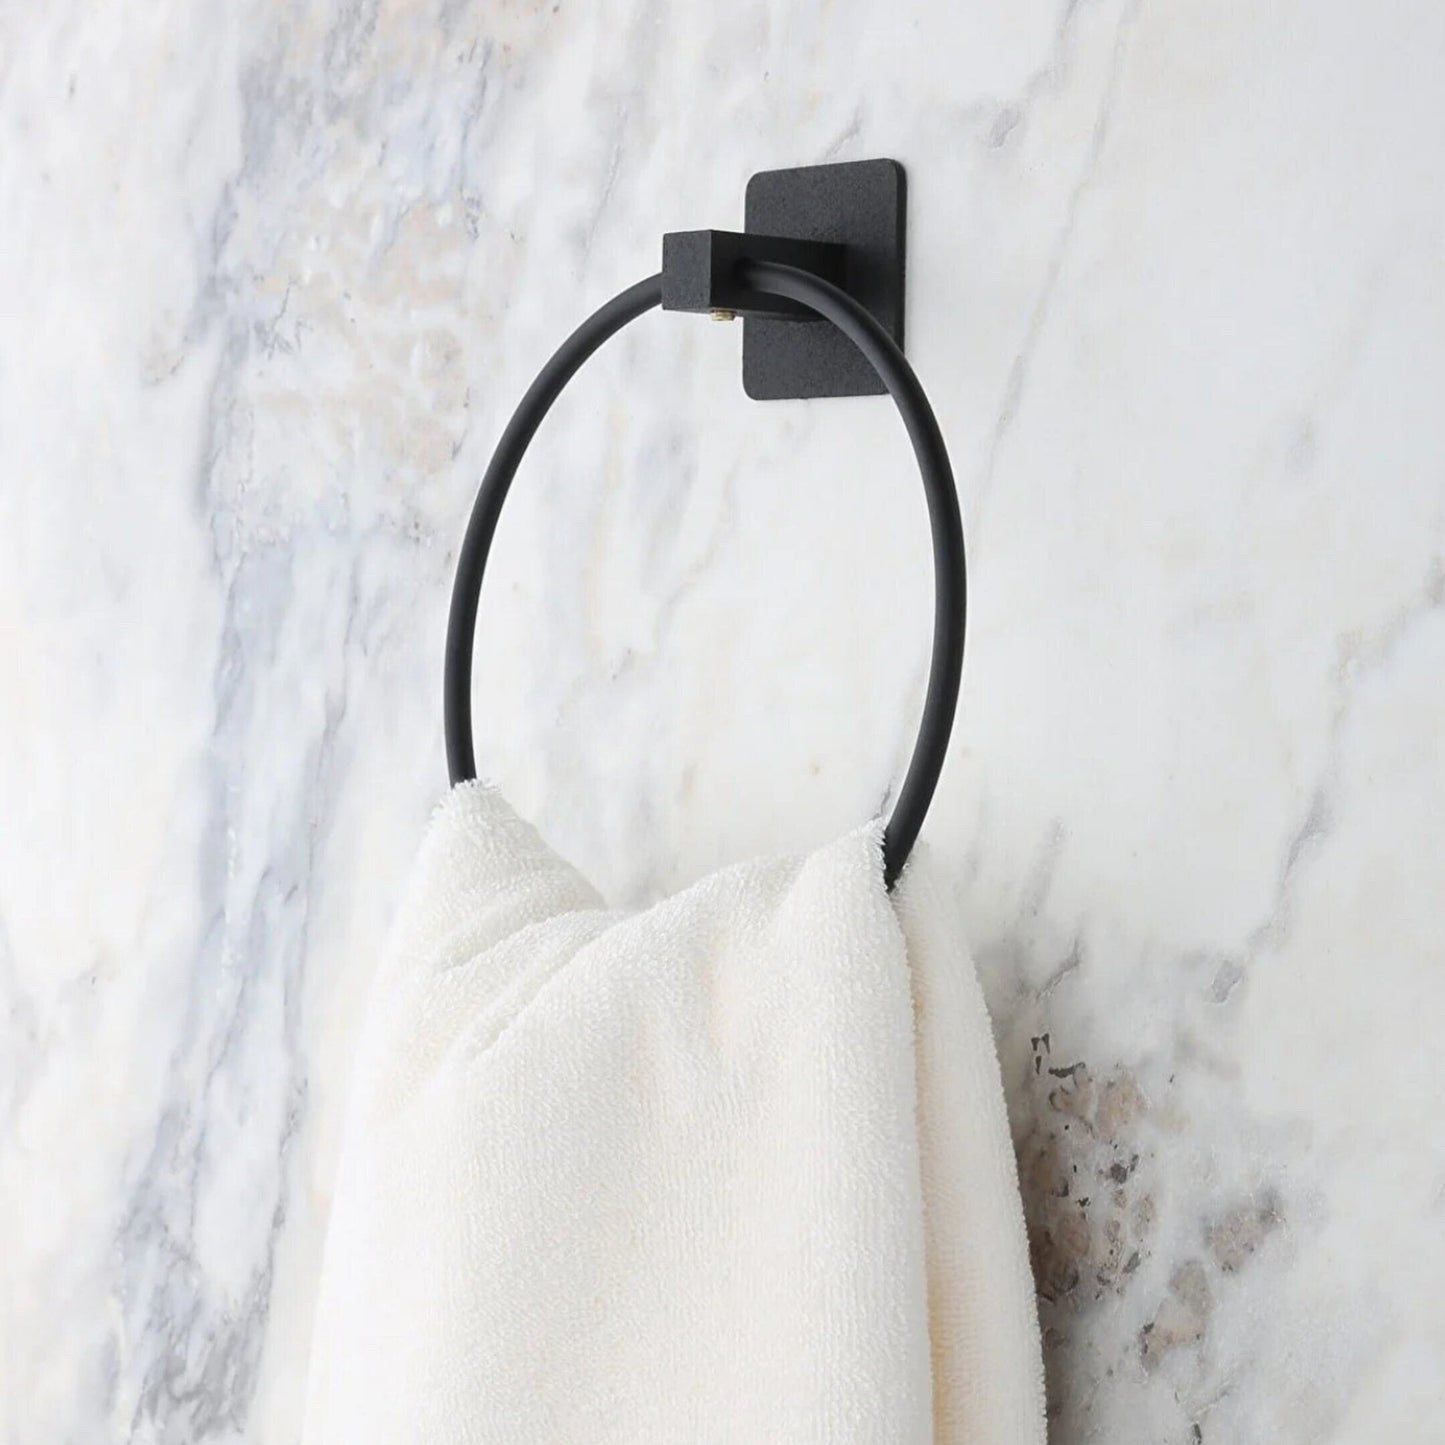 Adhesive Matt Black Round Towel Ring, Bath Towel Rail, Bathroom Accessories, Hand Towel Rail Holder, Contemporary Hotel Style - 16x16cm - Babila Home